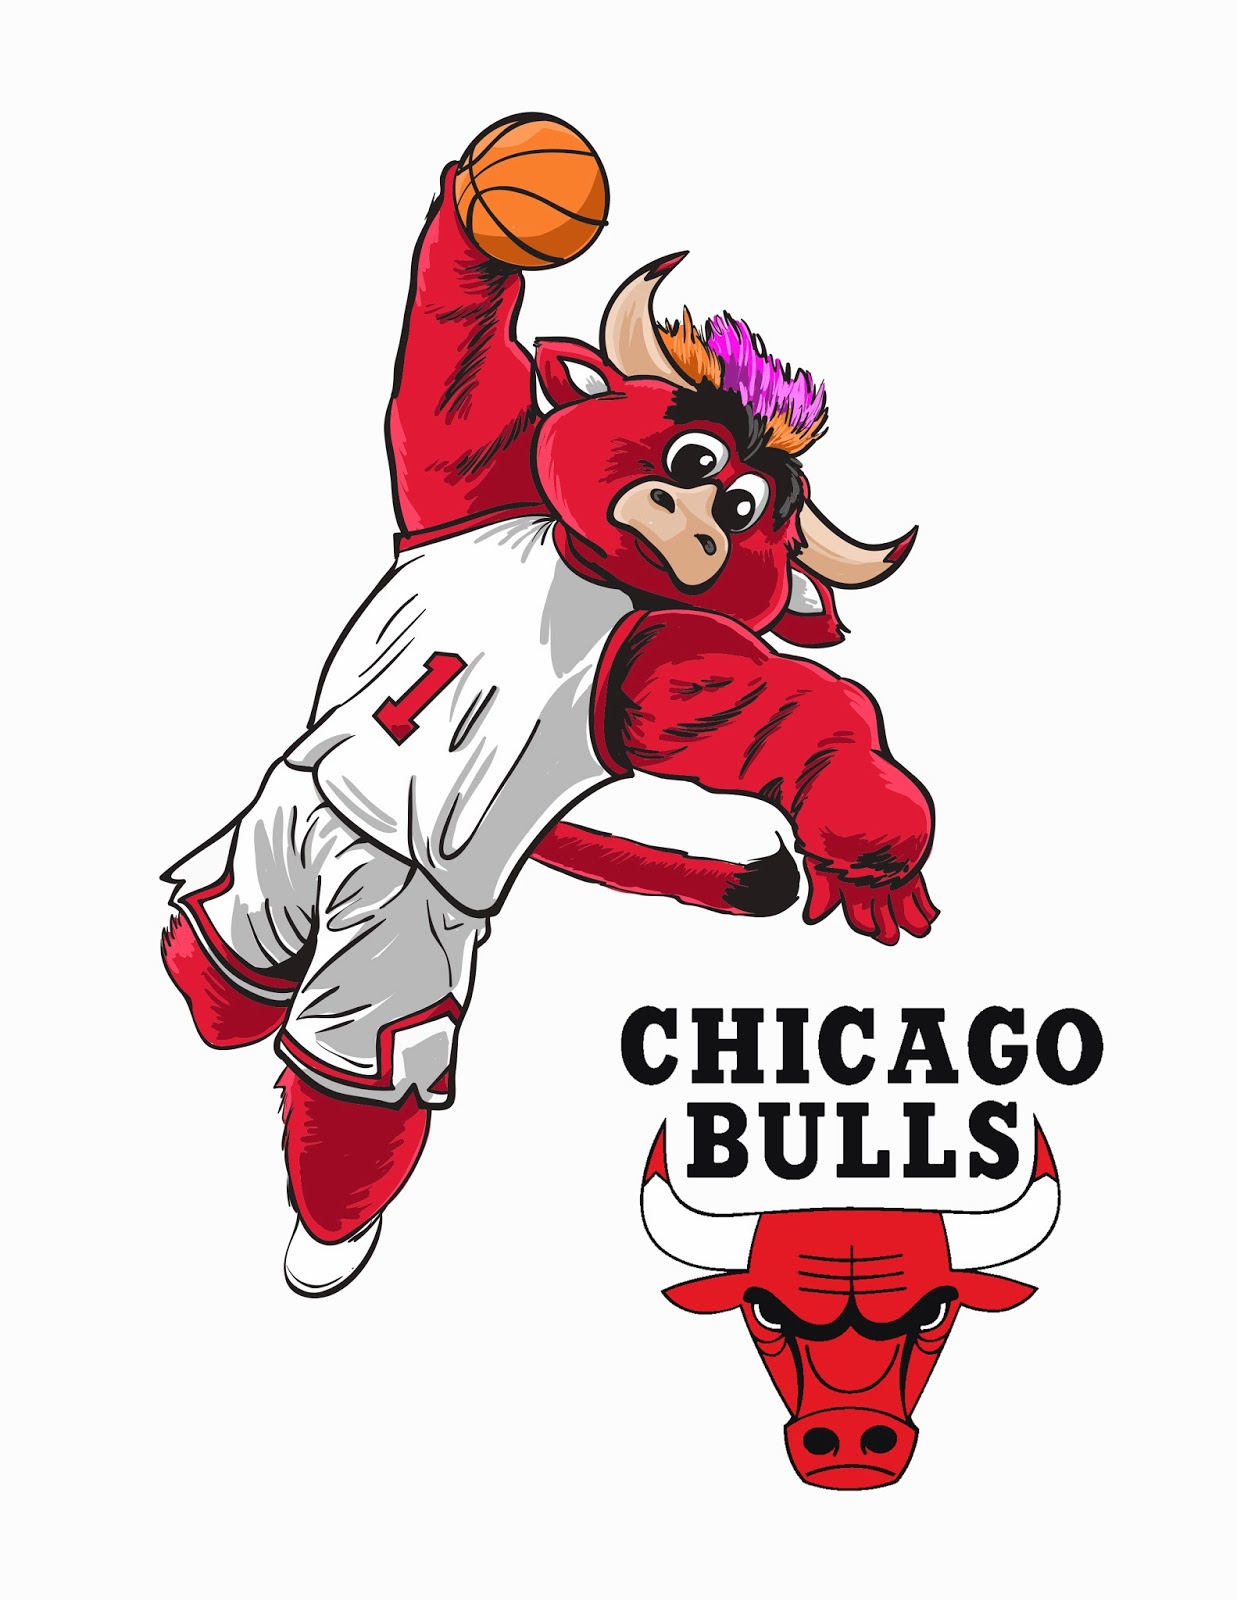 Chicago Bulls Vector at GetDrawings.com.